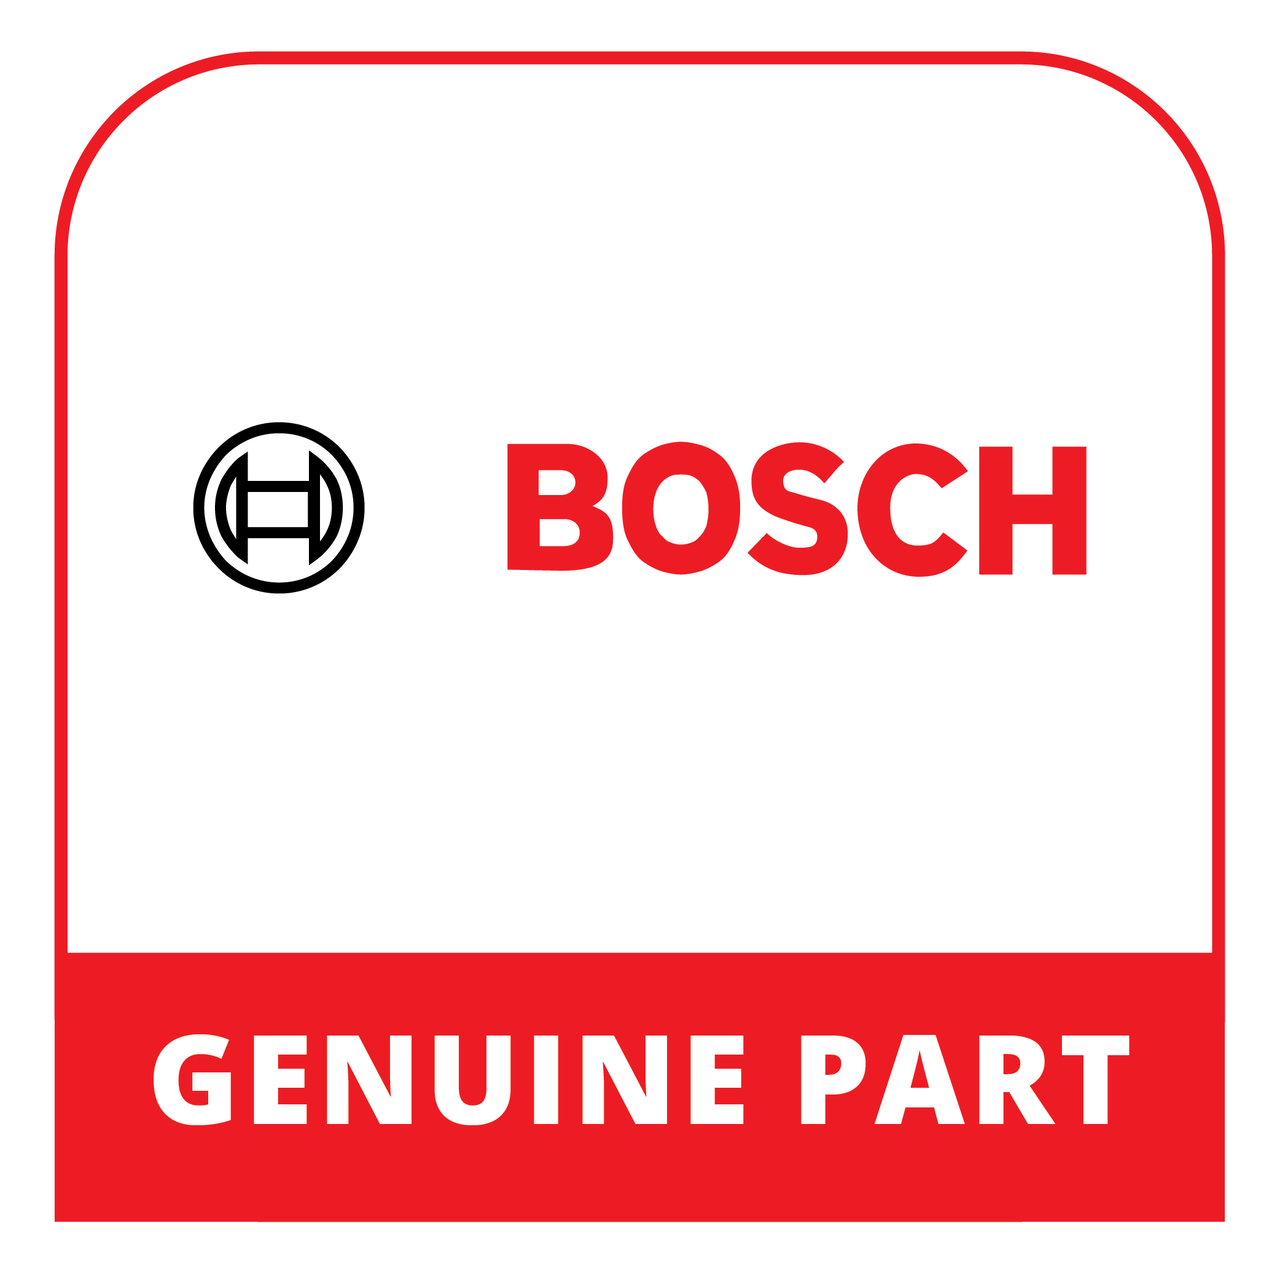 Bosch (Thermador) 20004402 - Shelf - Genuine Bosch (Thermador) Part